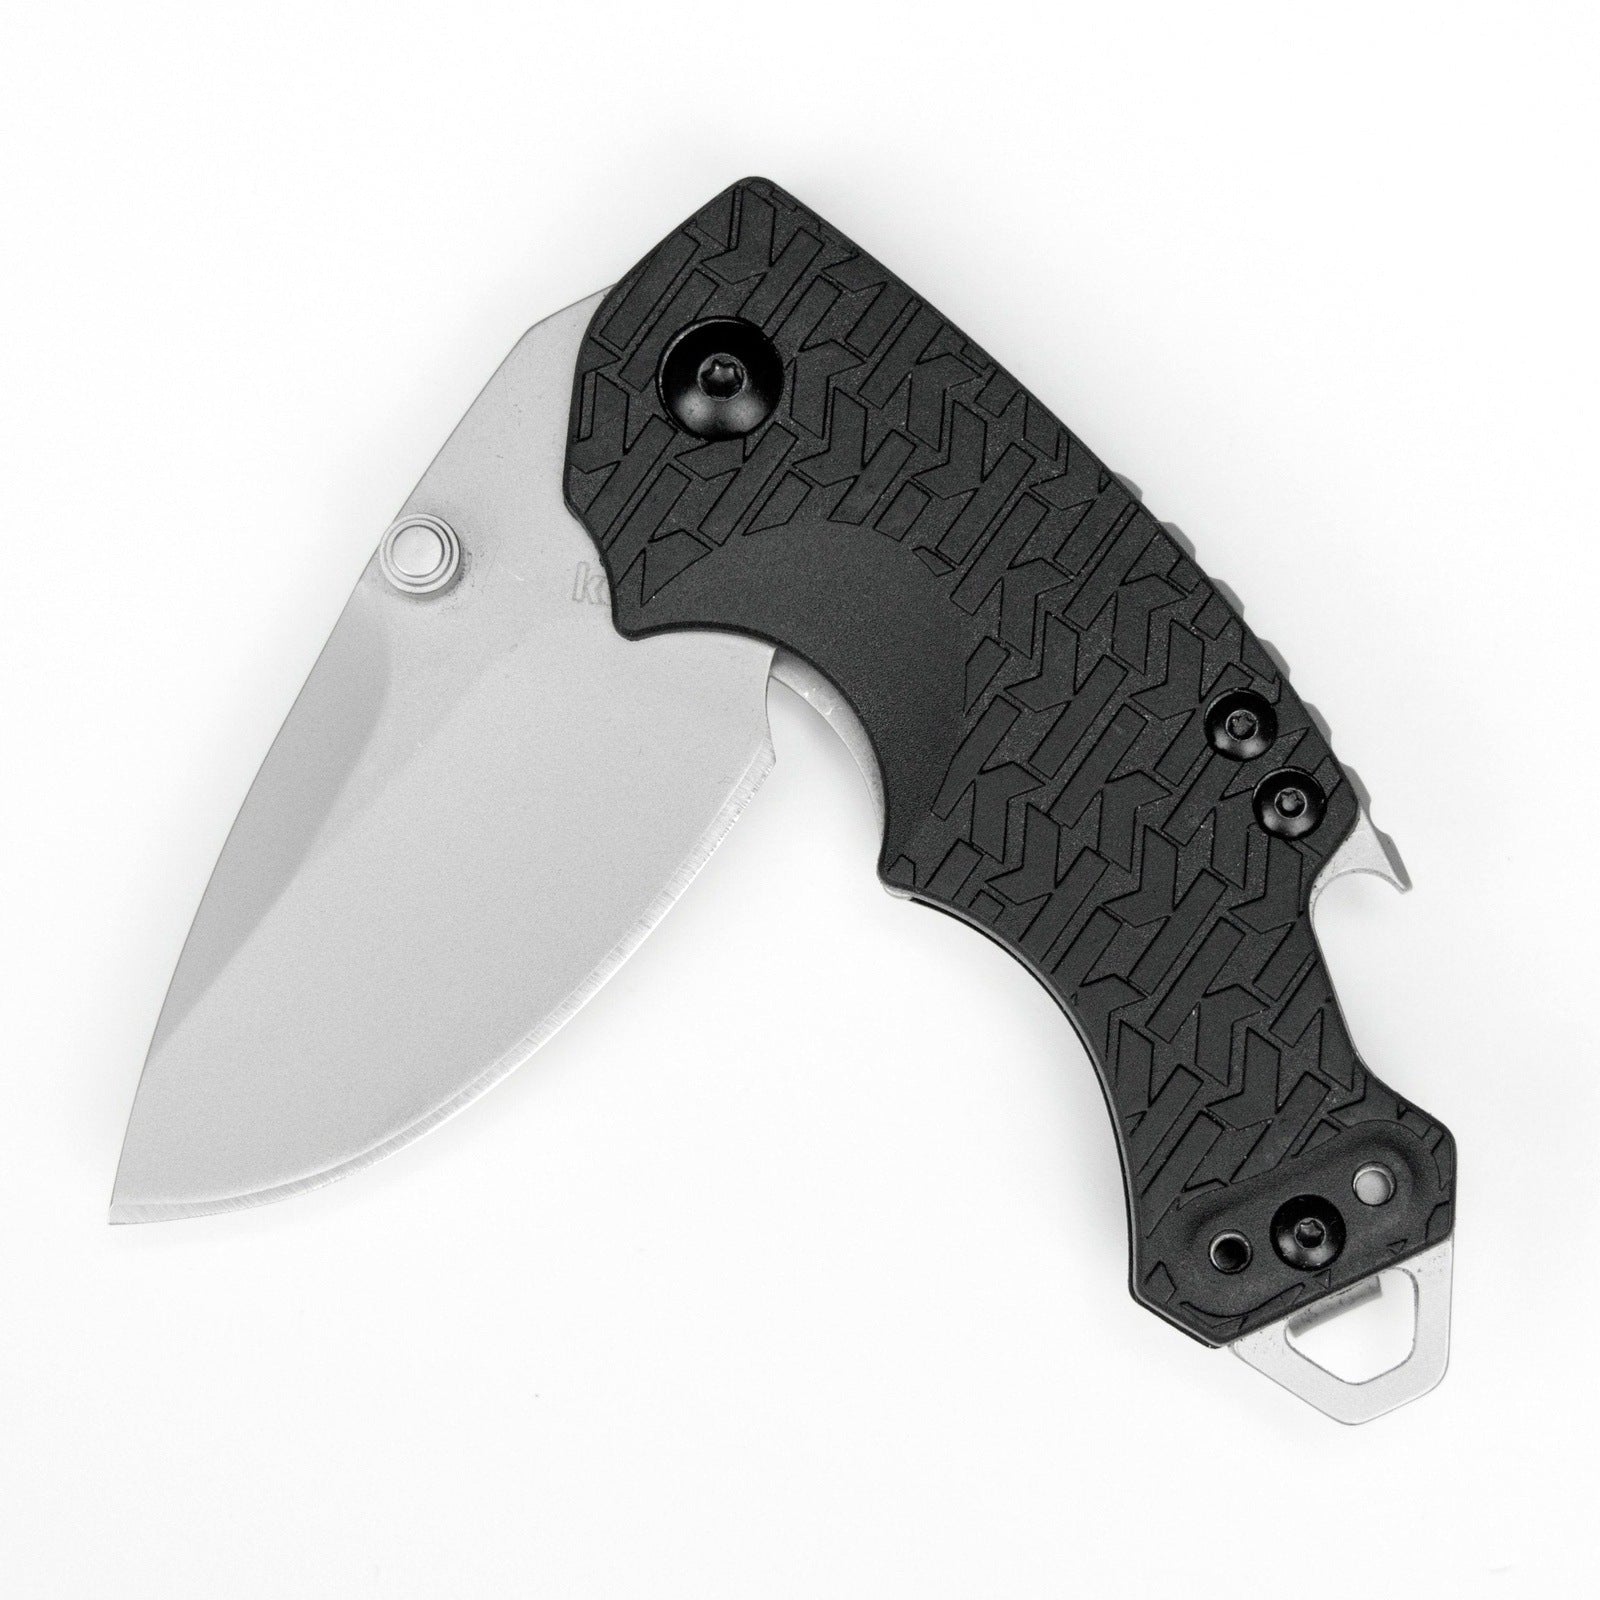 Kershaw Knives 8700X Shuffle Clam - Opticdeals